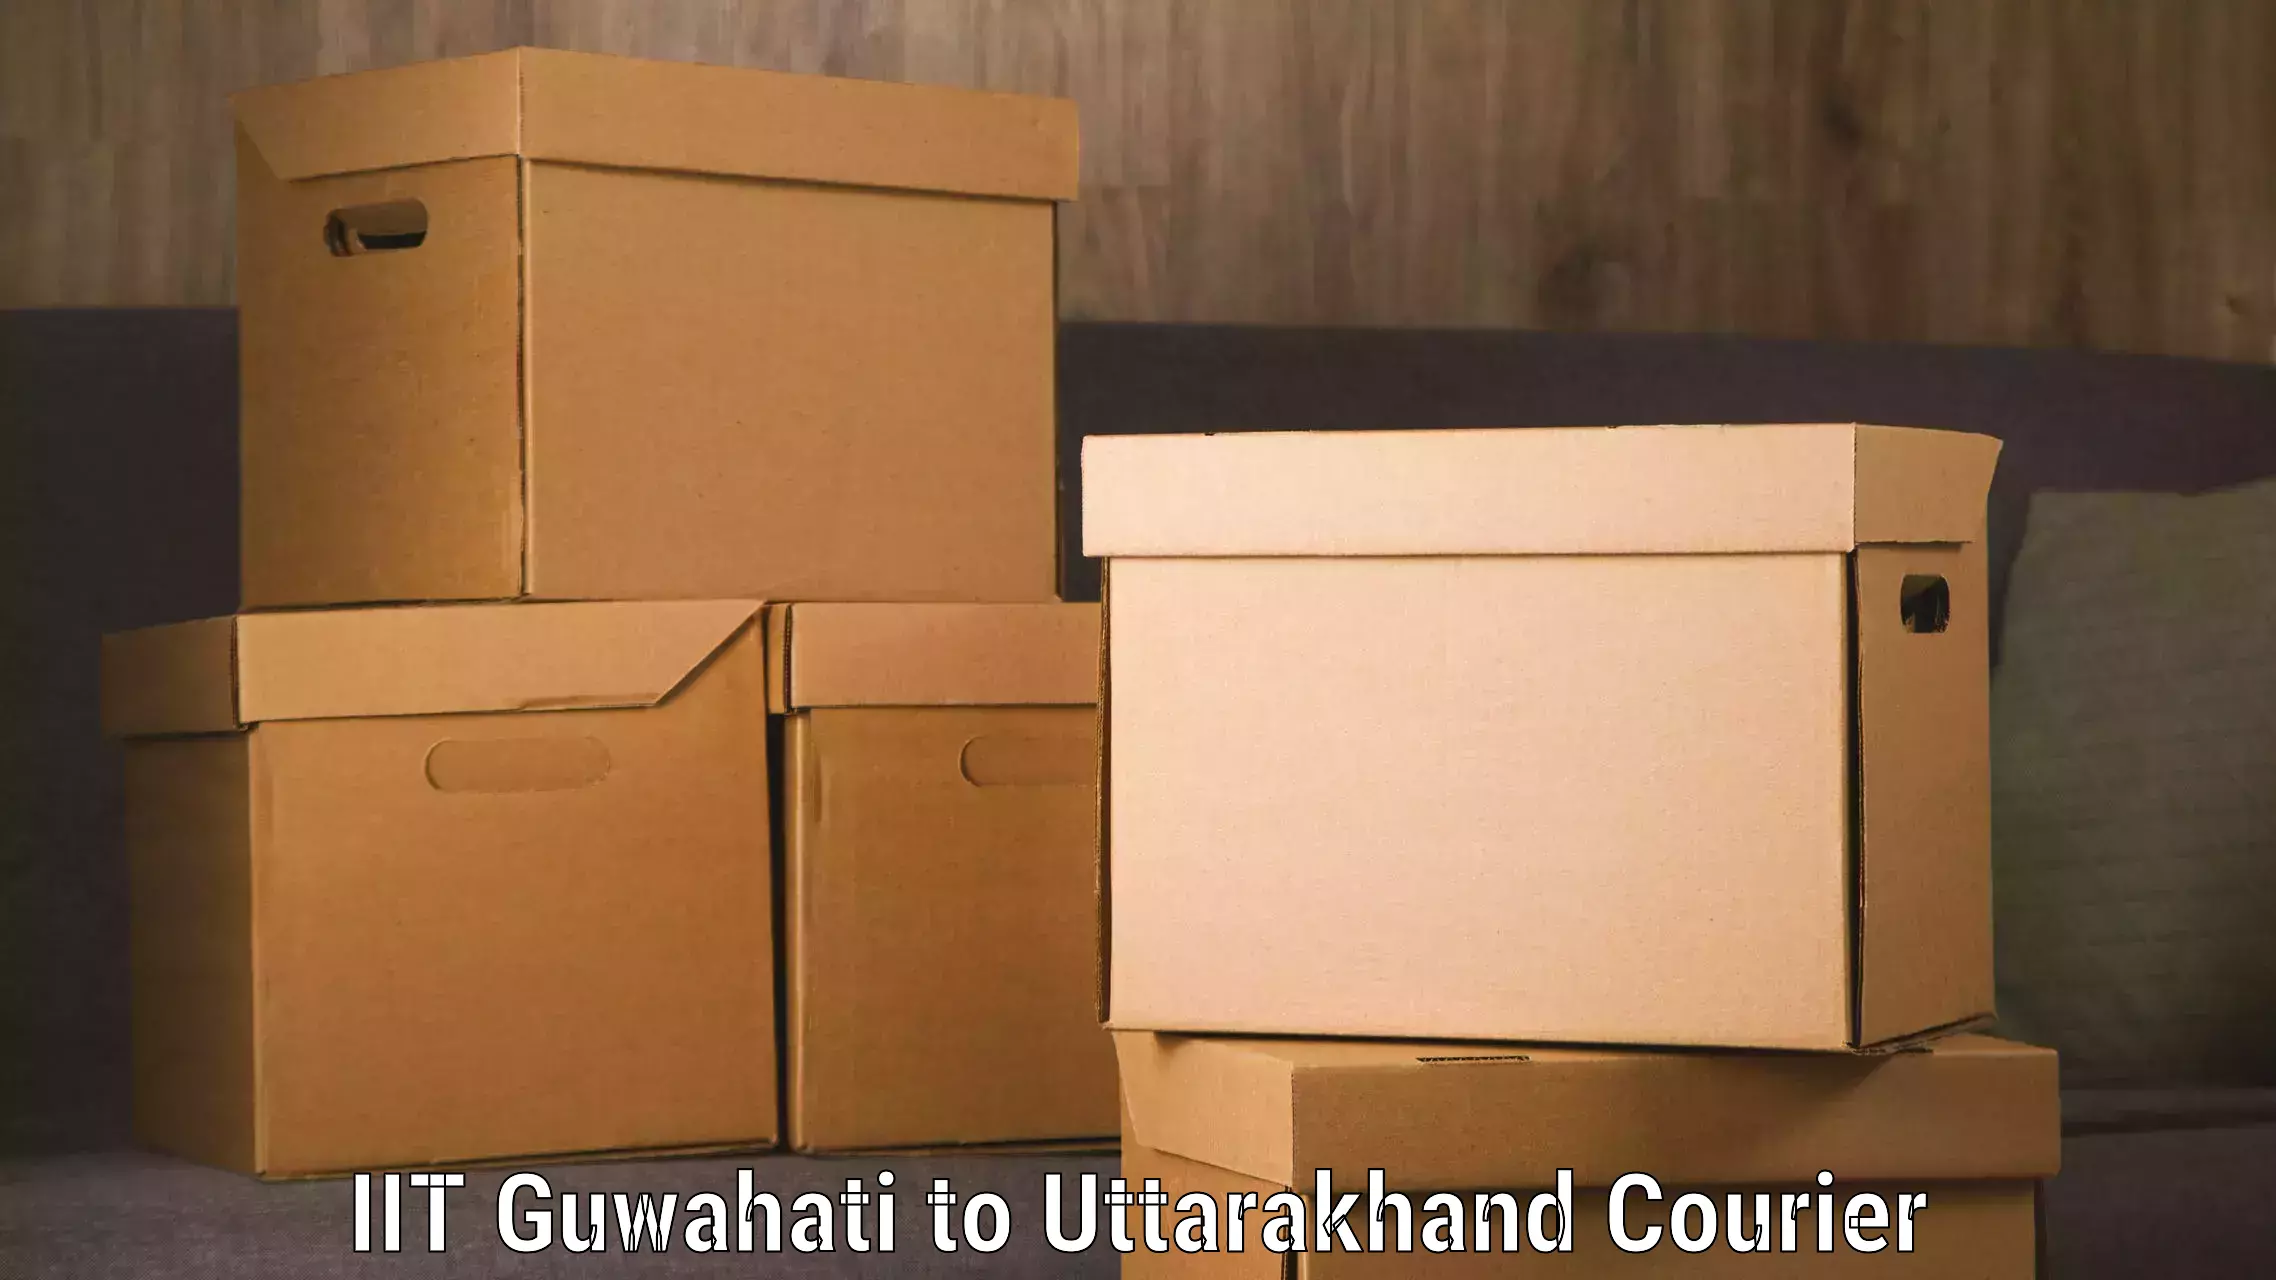 Online luggage shipping in IIT Guwahati to IIT Roorkee